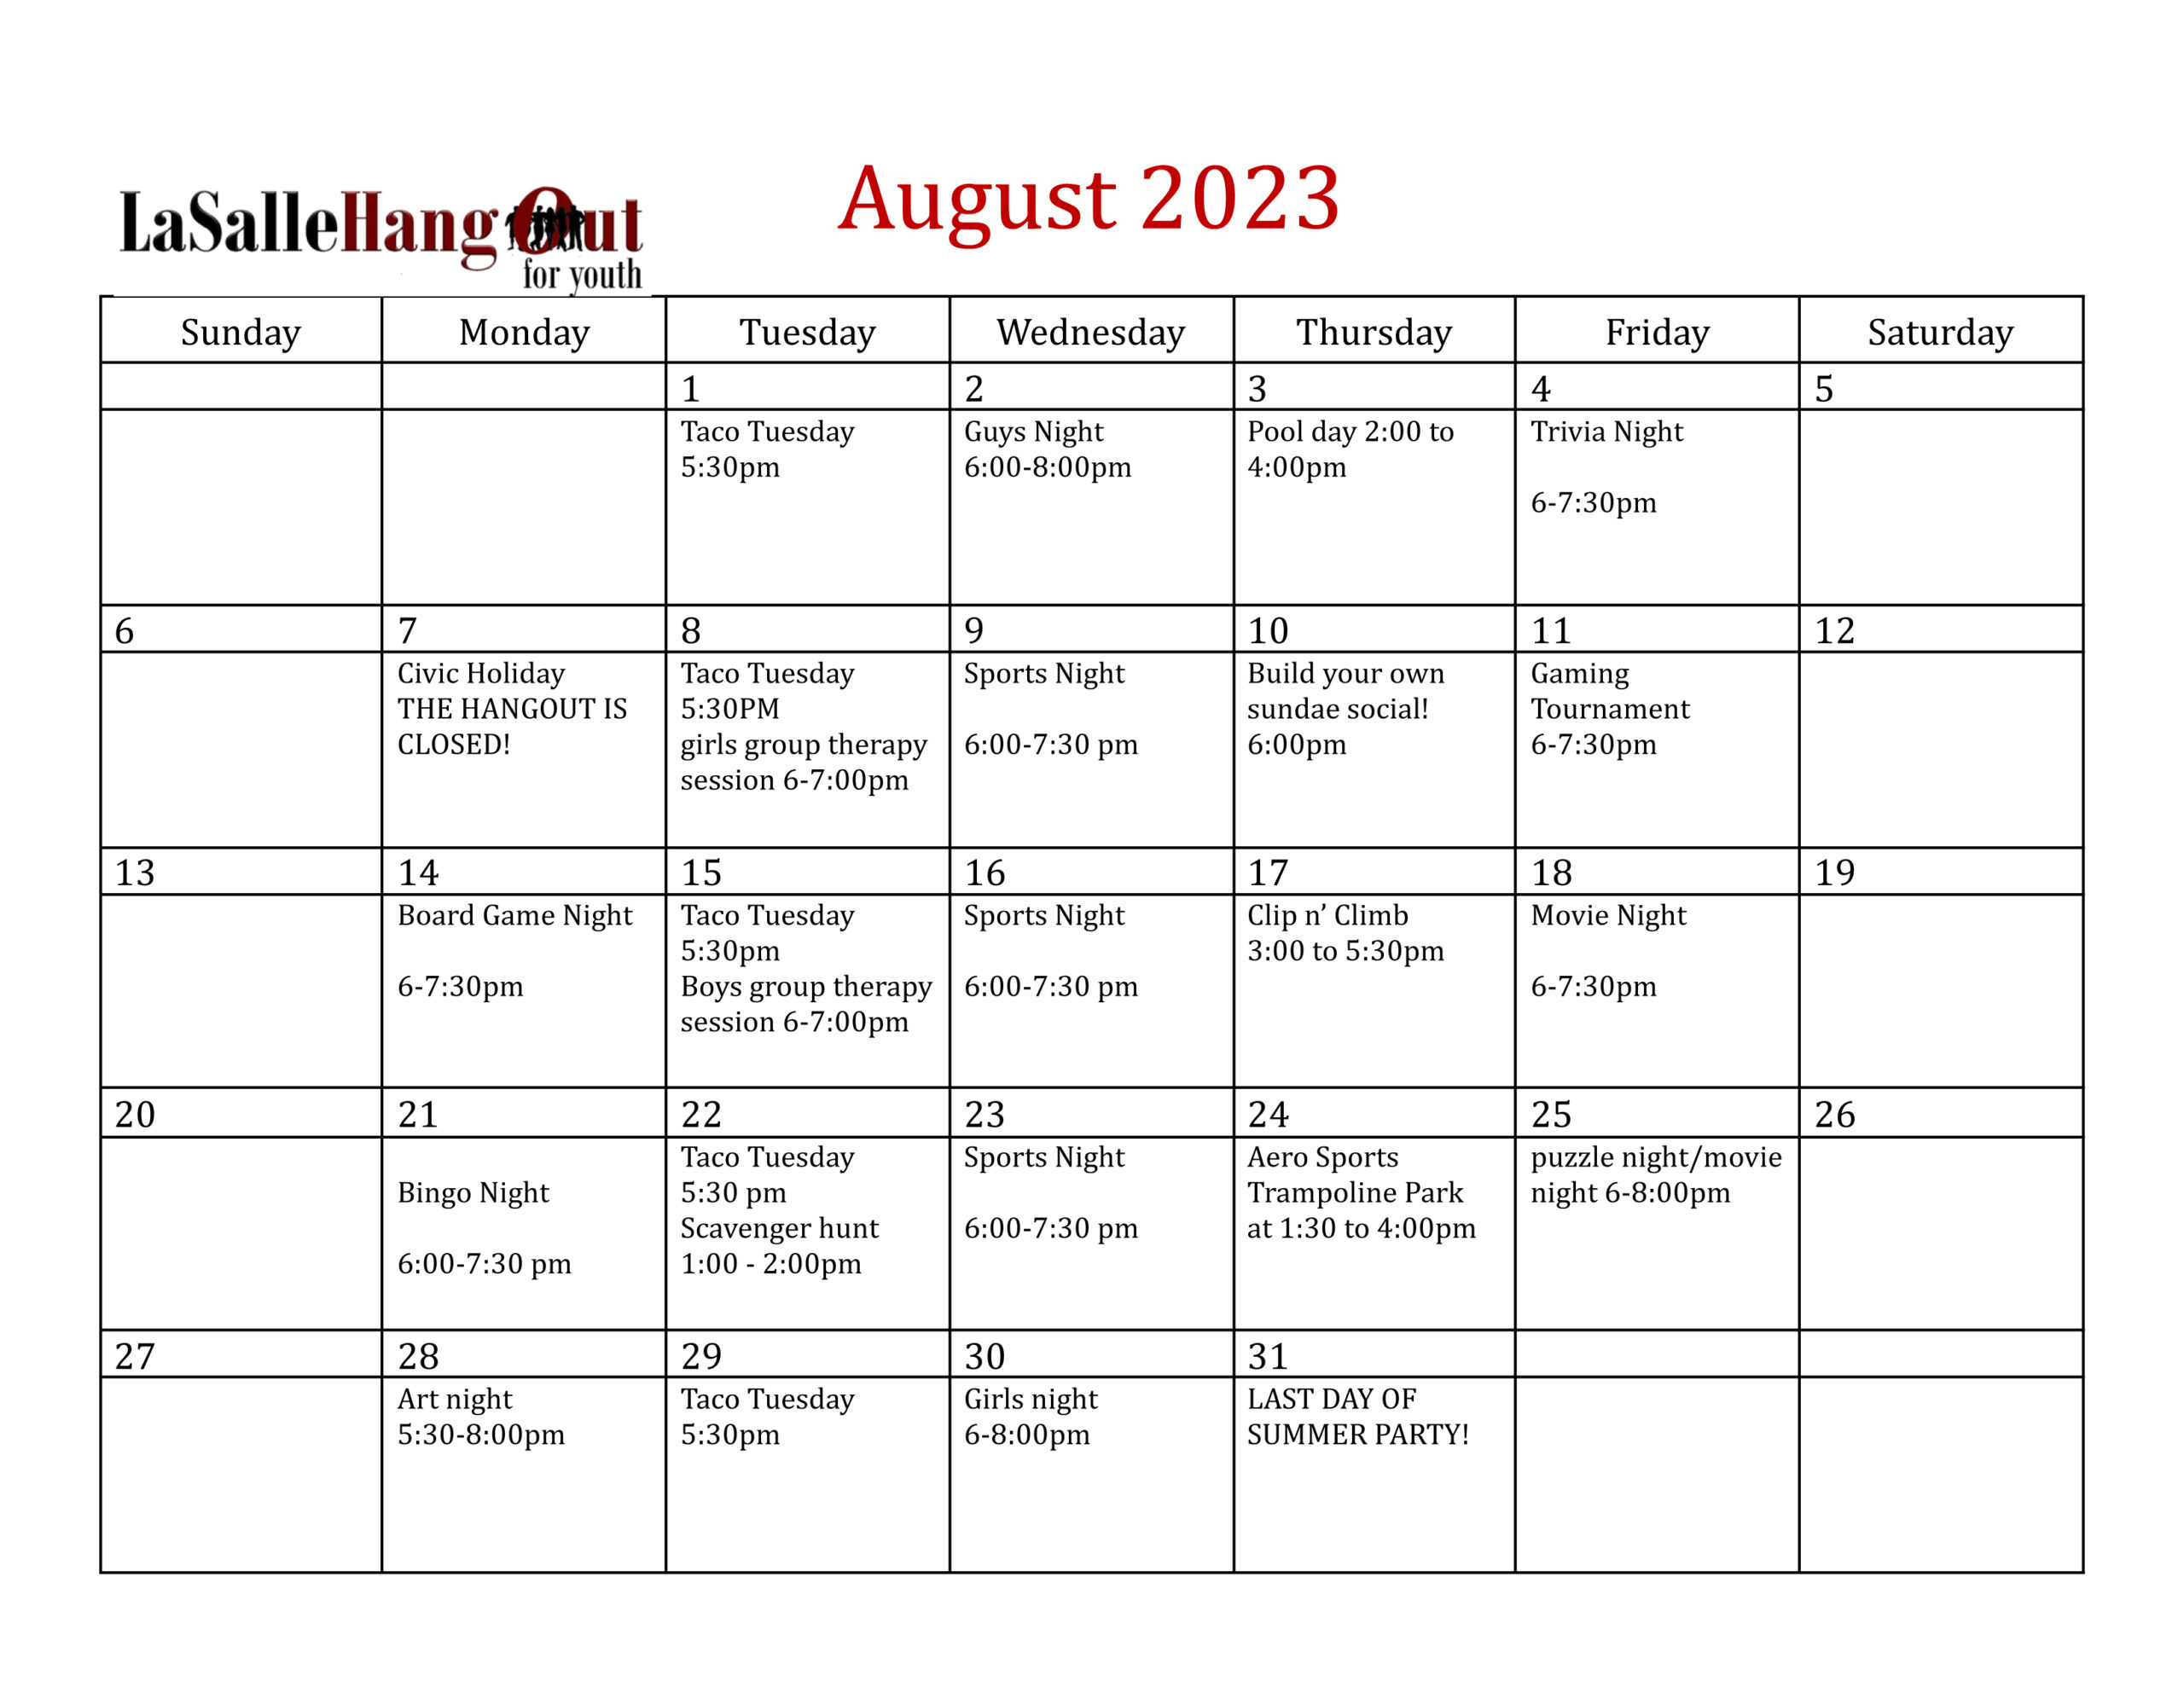 Tentative August 2023 schedule